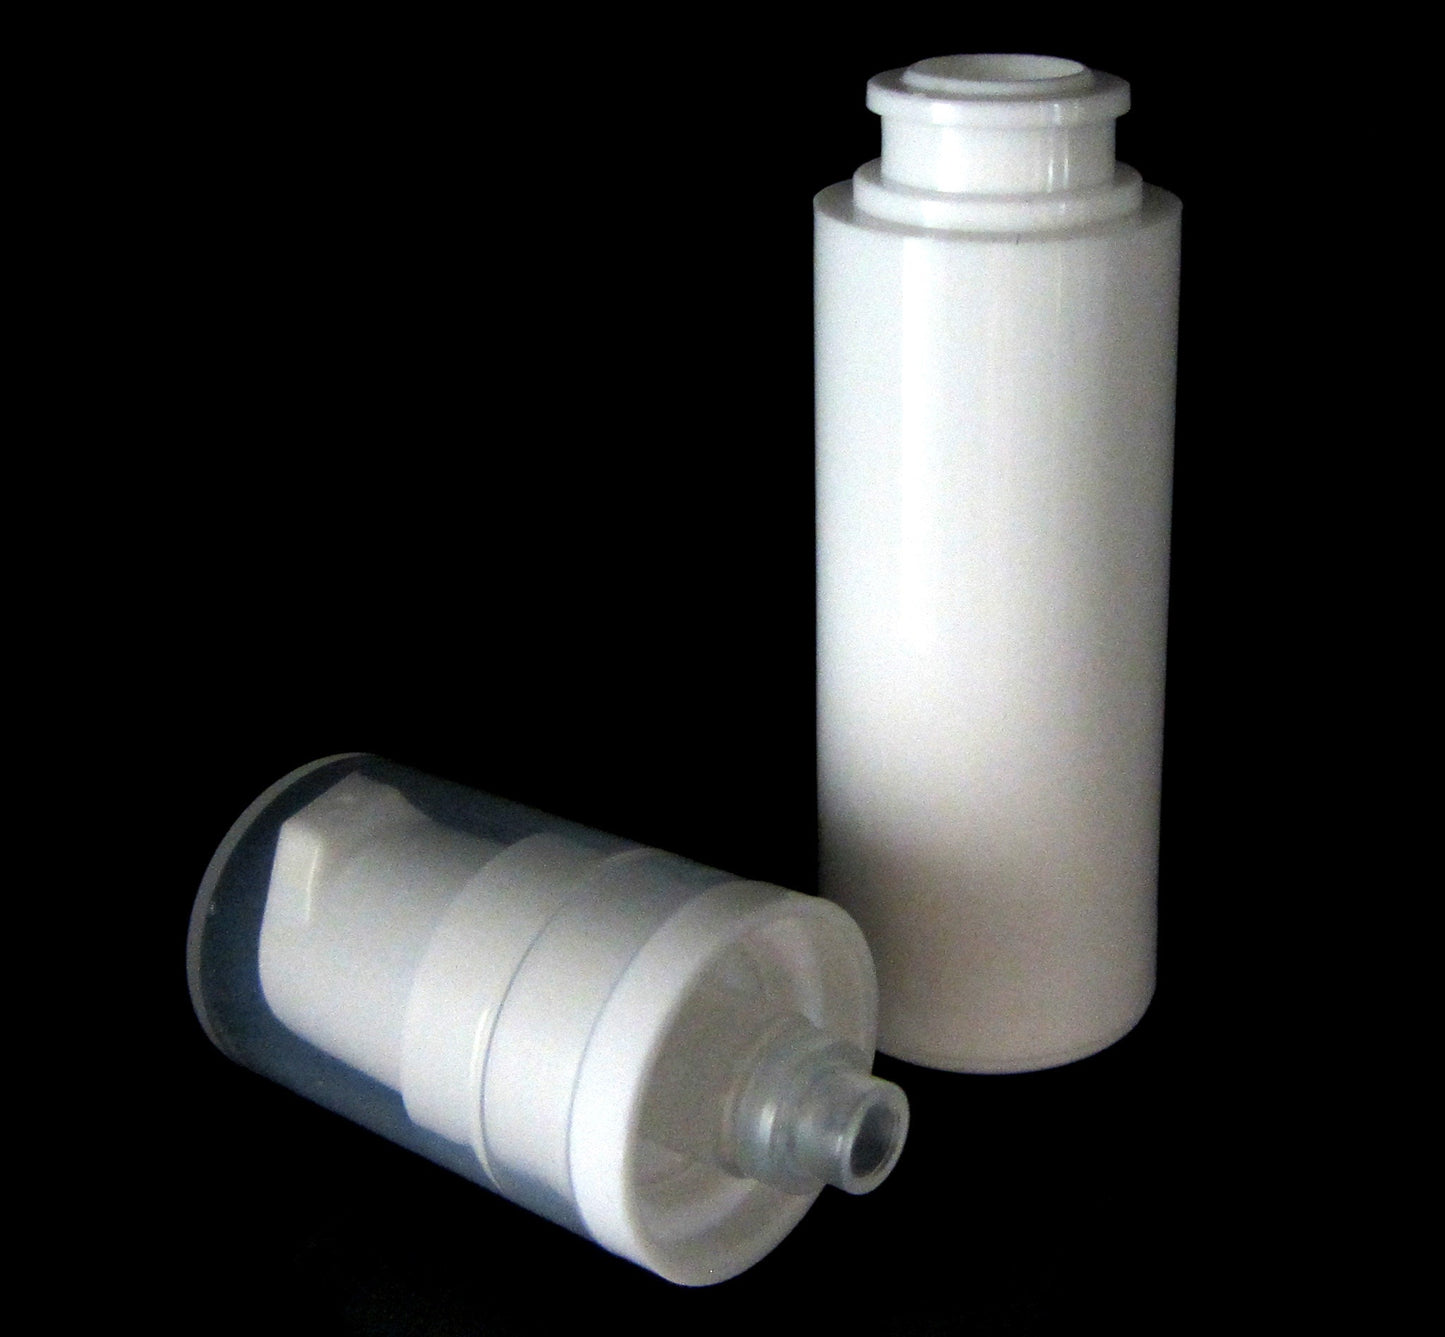 Airless Pump Serum Mini Travel Disposable Trial Sample Bottles 5 Ml White (5 Bottles) 3405-5 Discount Cosmetic Jars